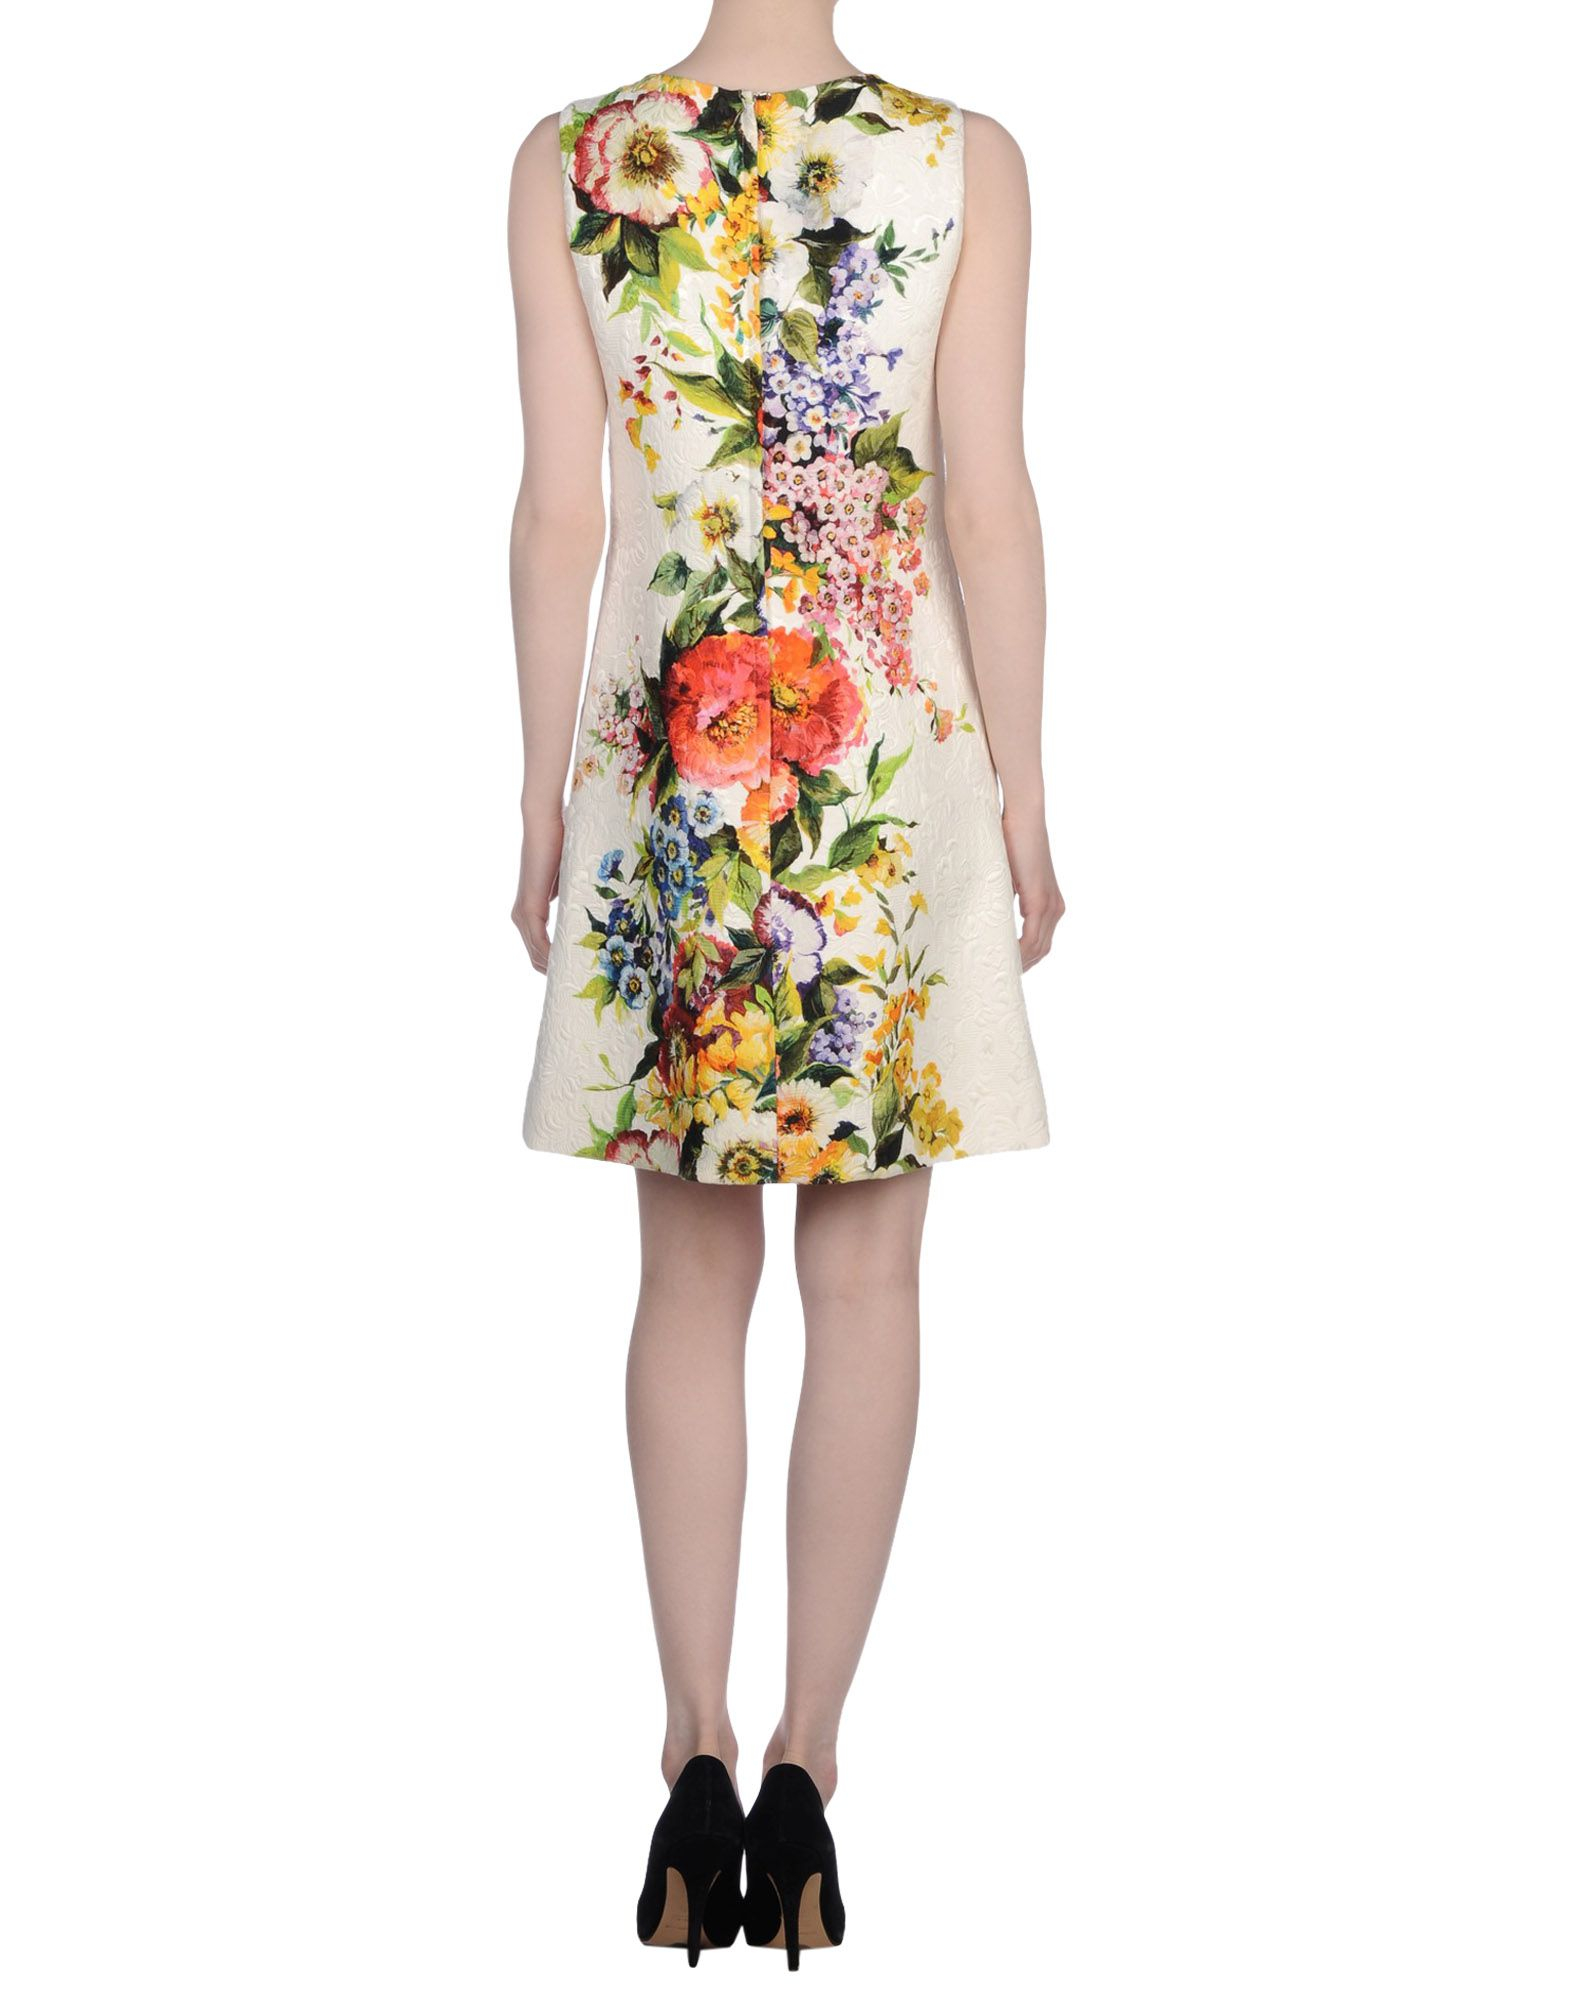 Lyst - Dolce & Gabbana Flower Print Dress in Yellow